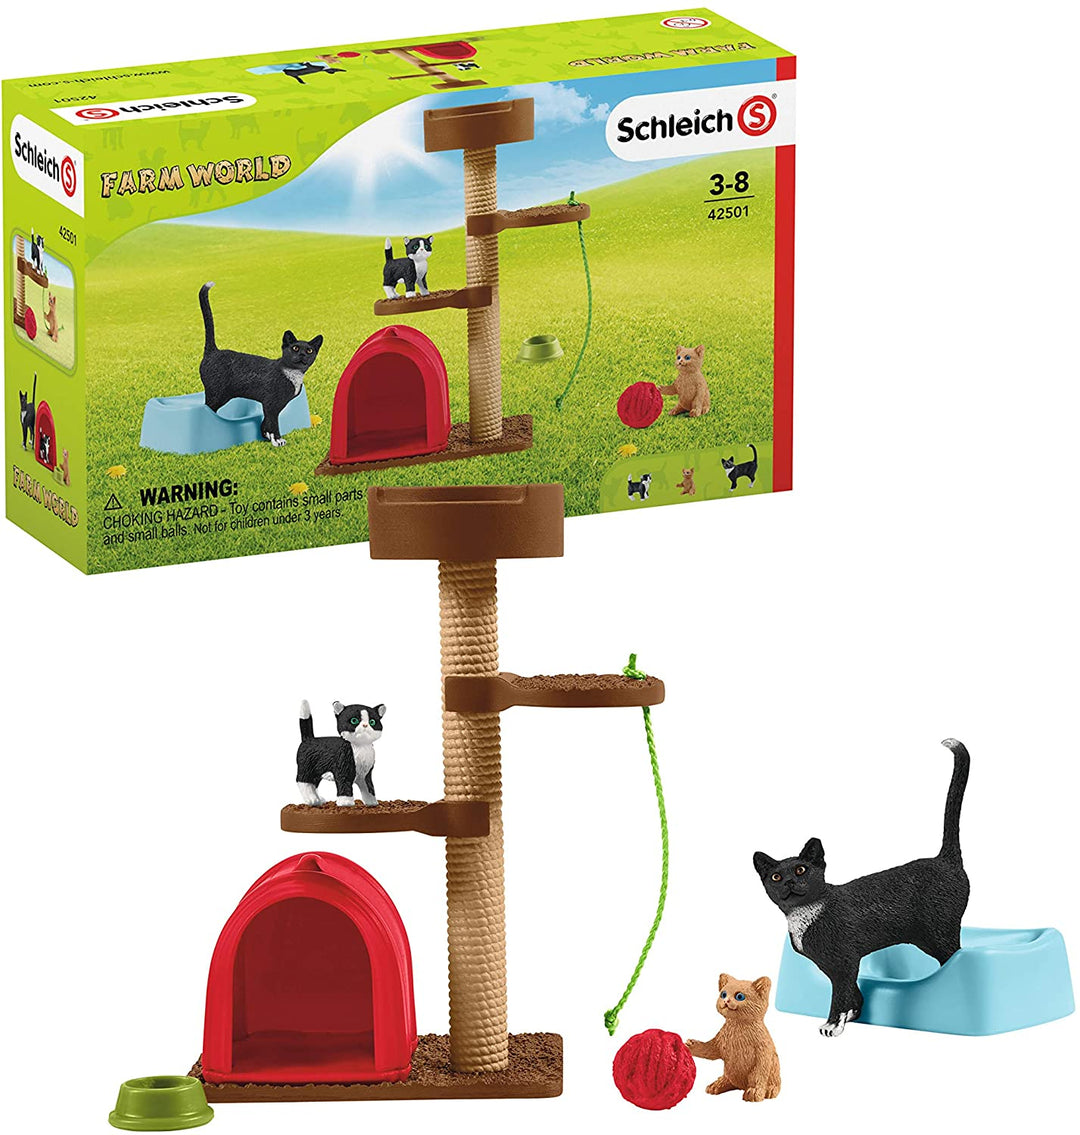 Schleich 42501 Playtime per Cute Cats Farm World